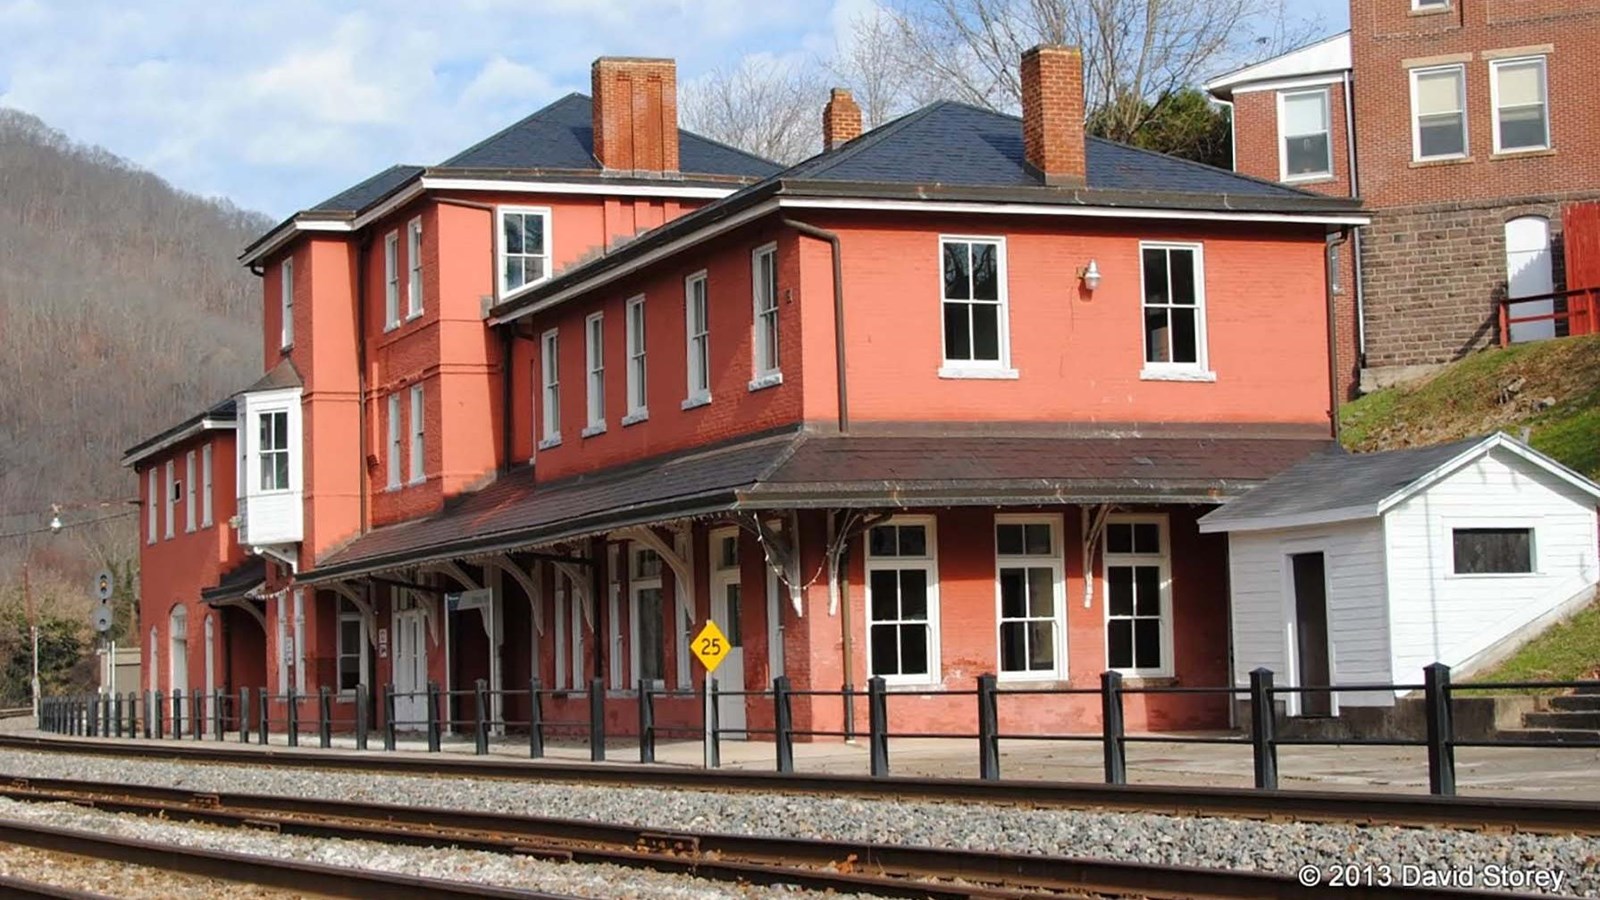 A long red brick railroad depot next to a railroad track.